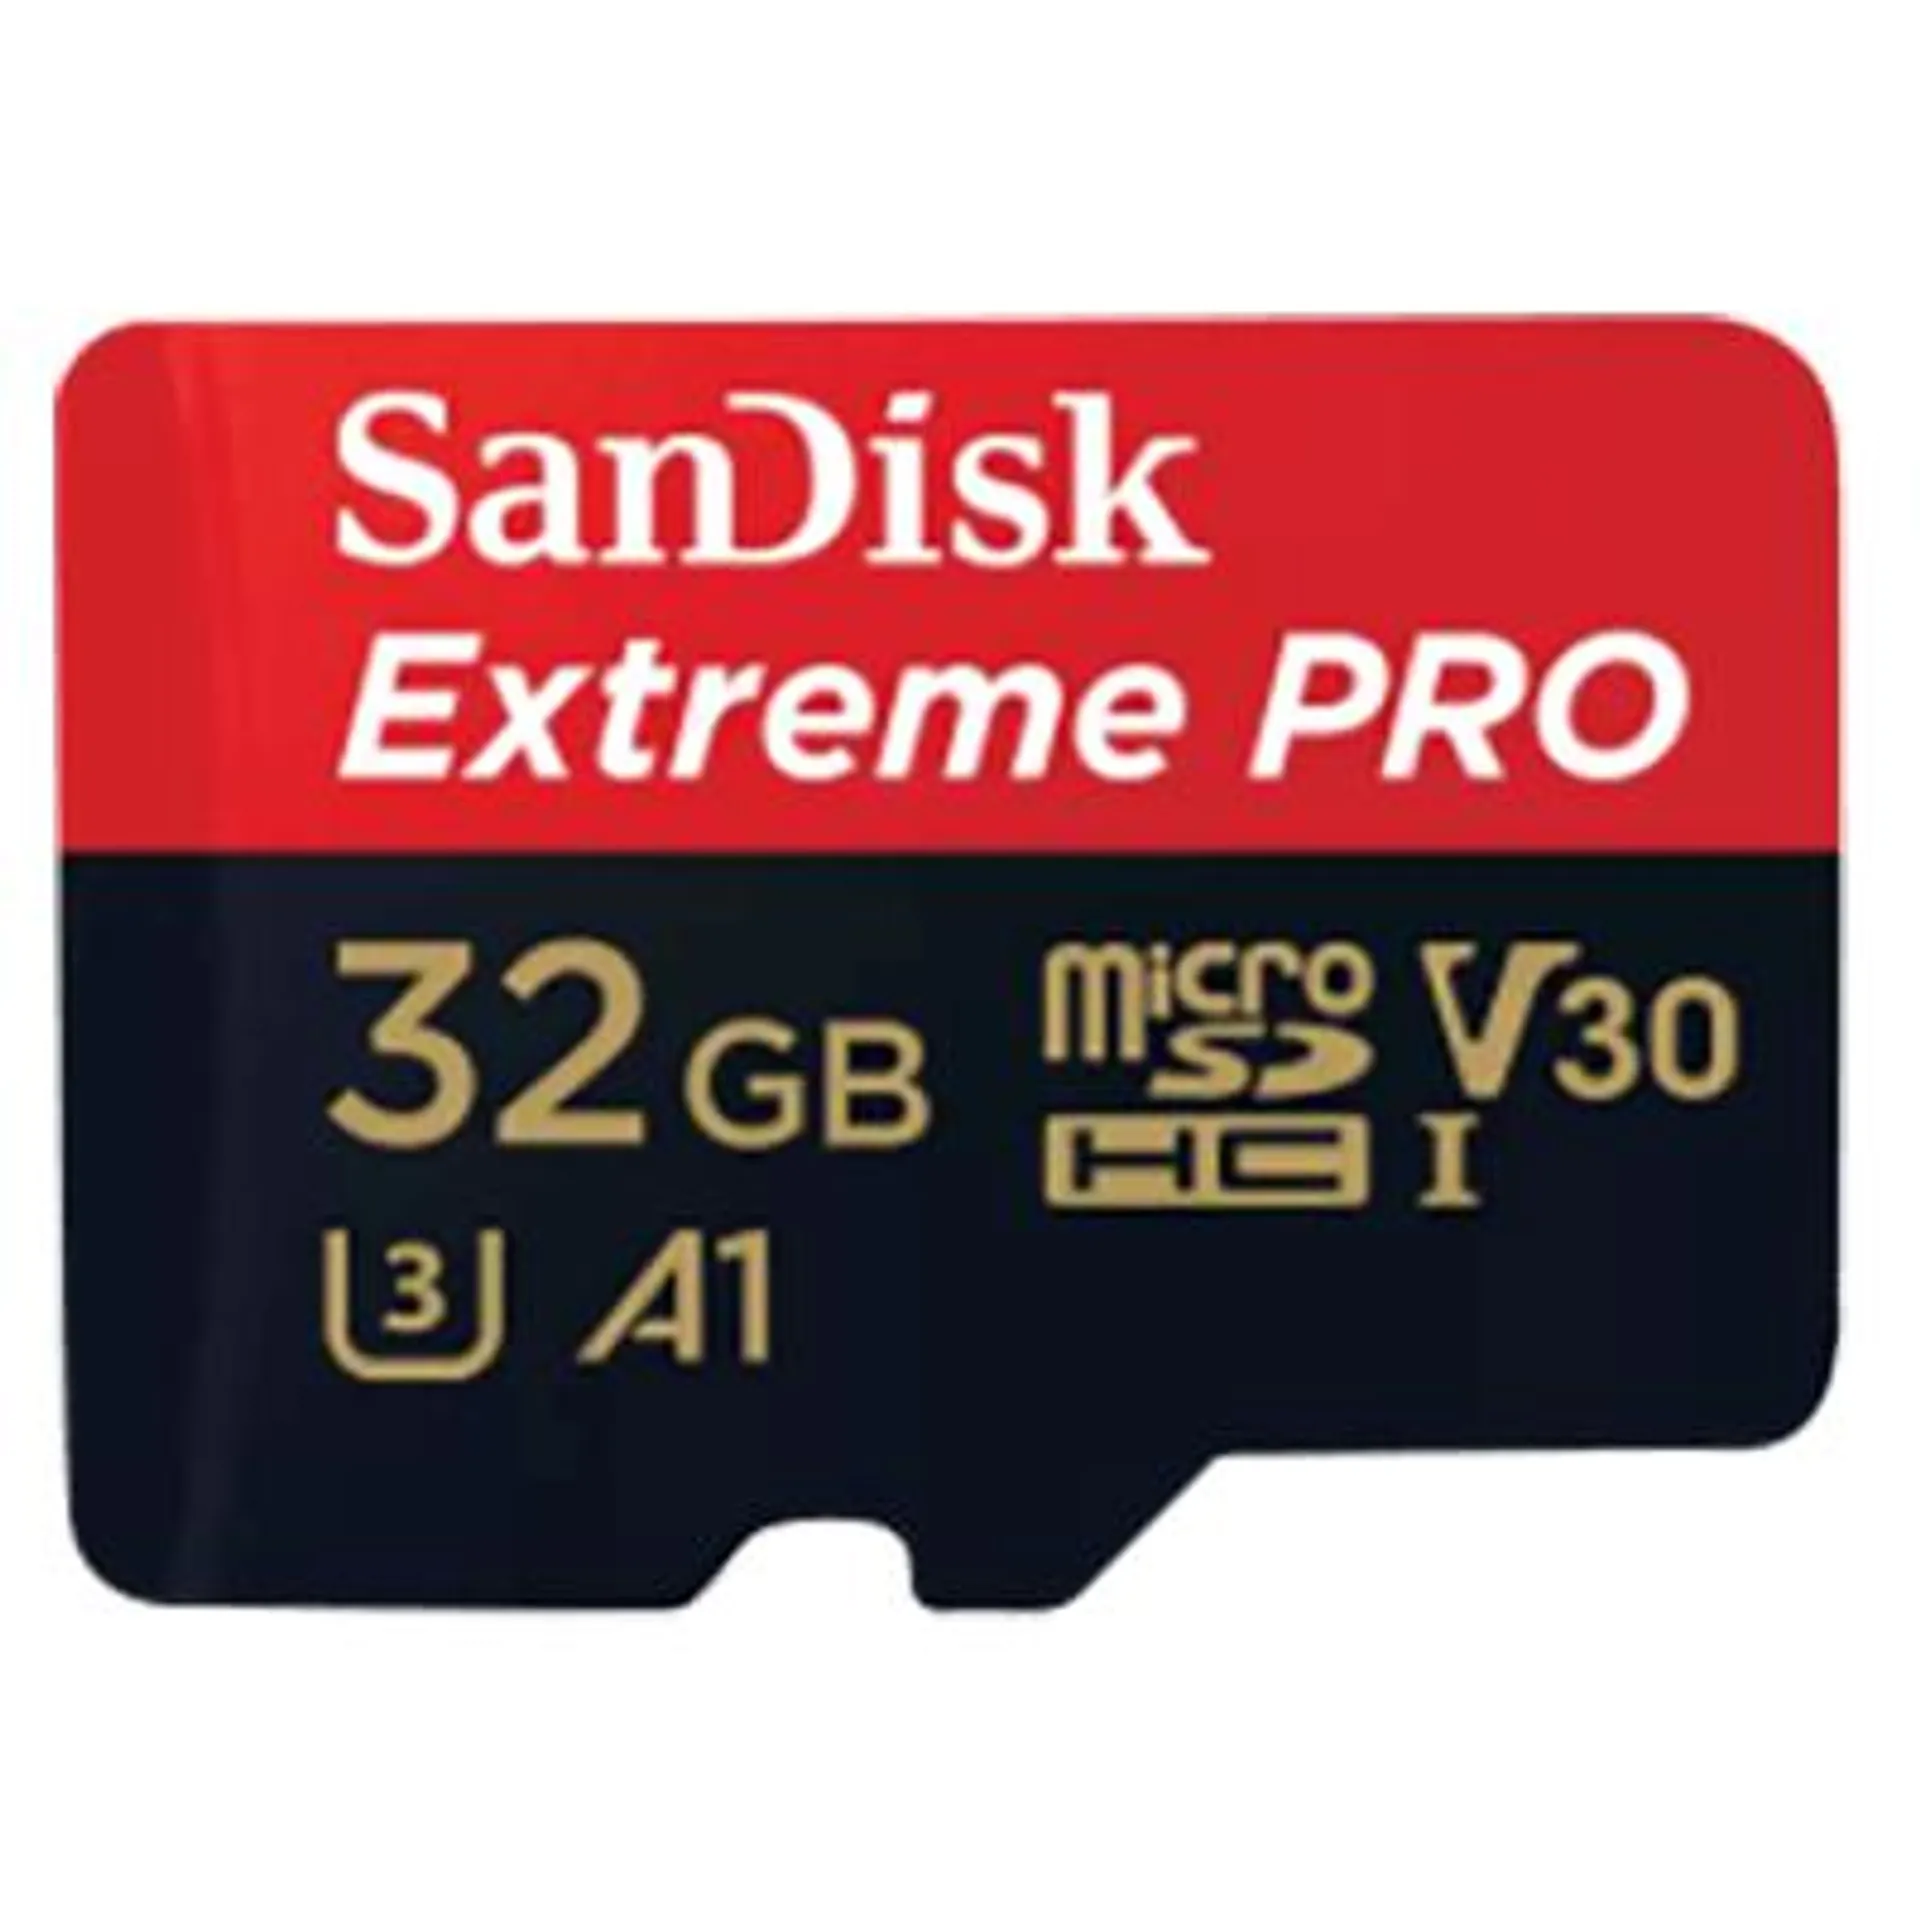 Extreme PRO microSDXC